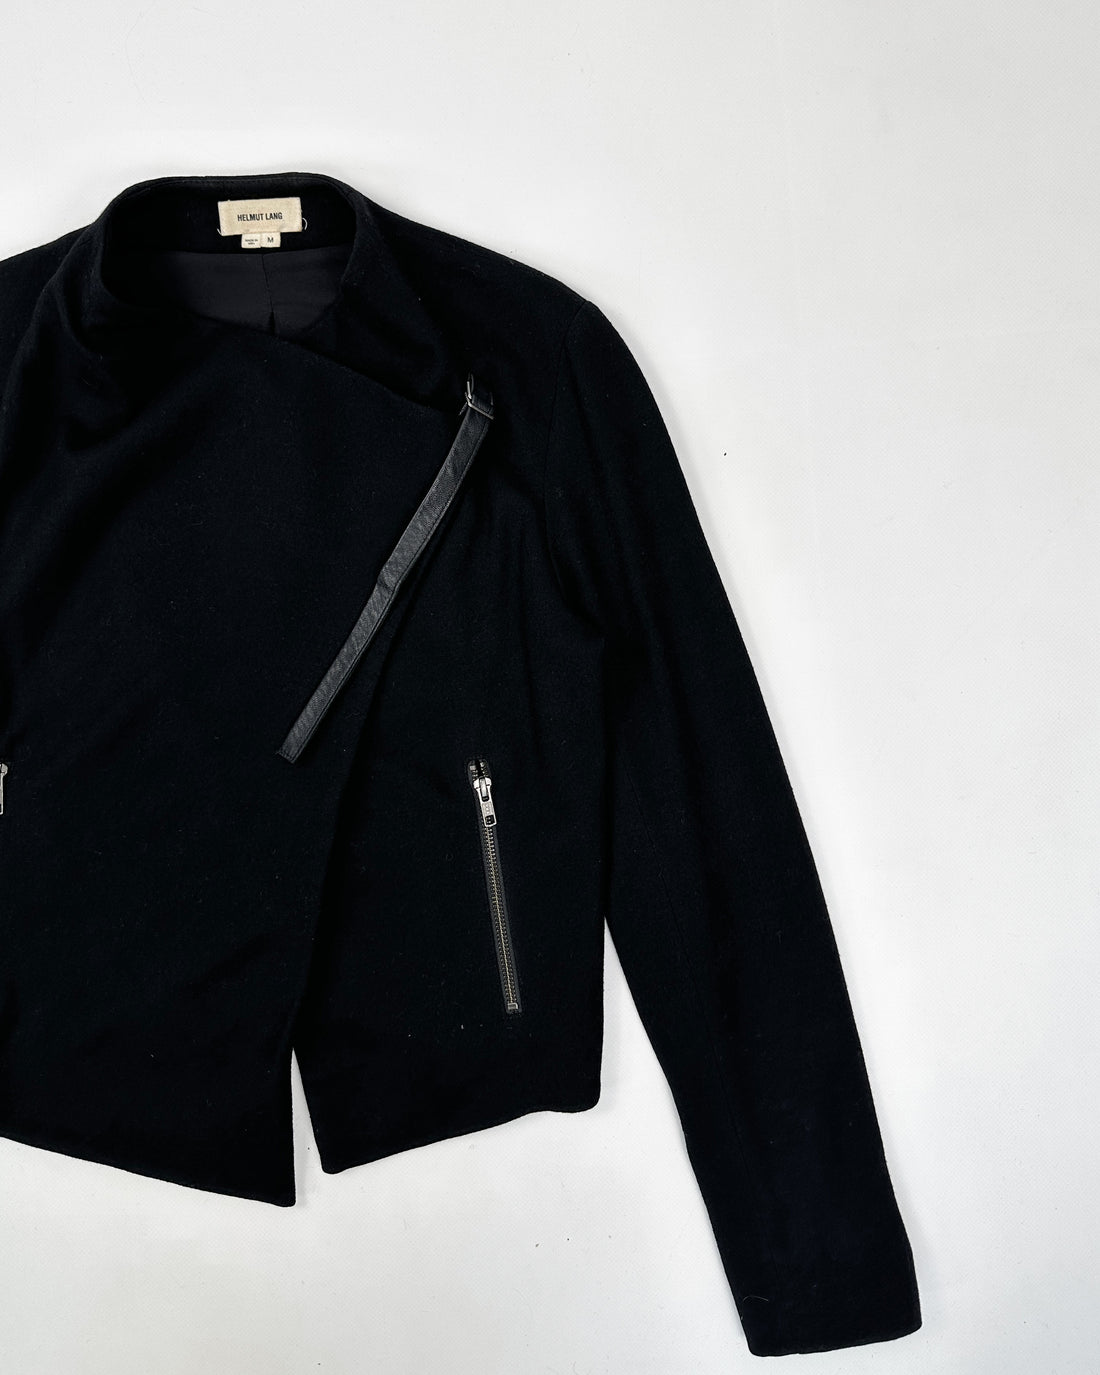 Helmut Lang Leather Strap Black Wool Jacket 1990's